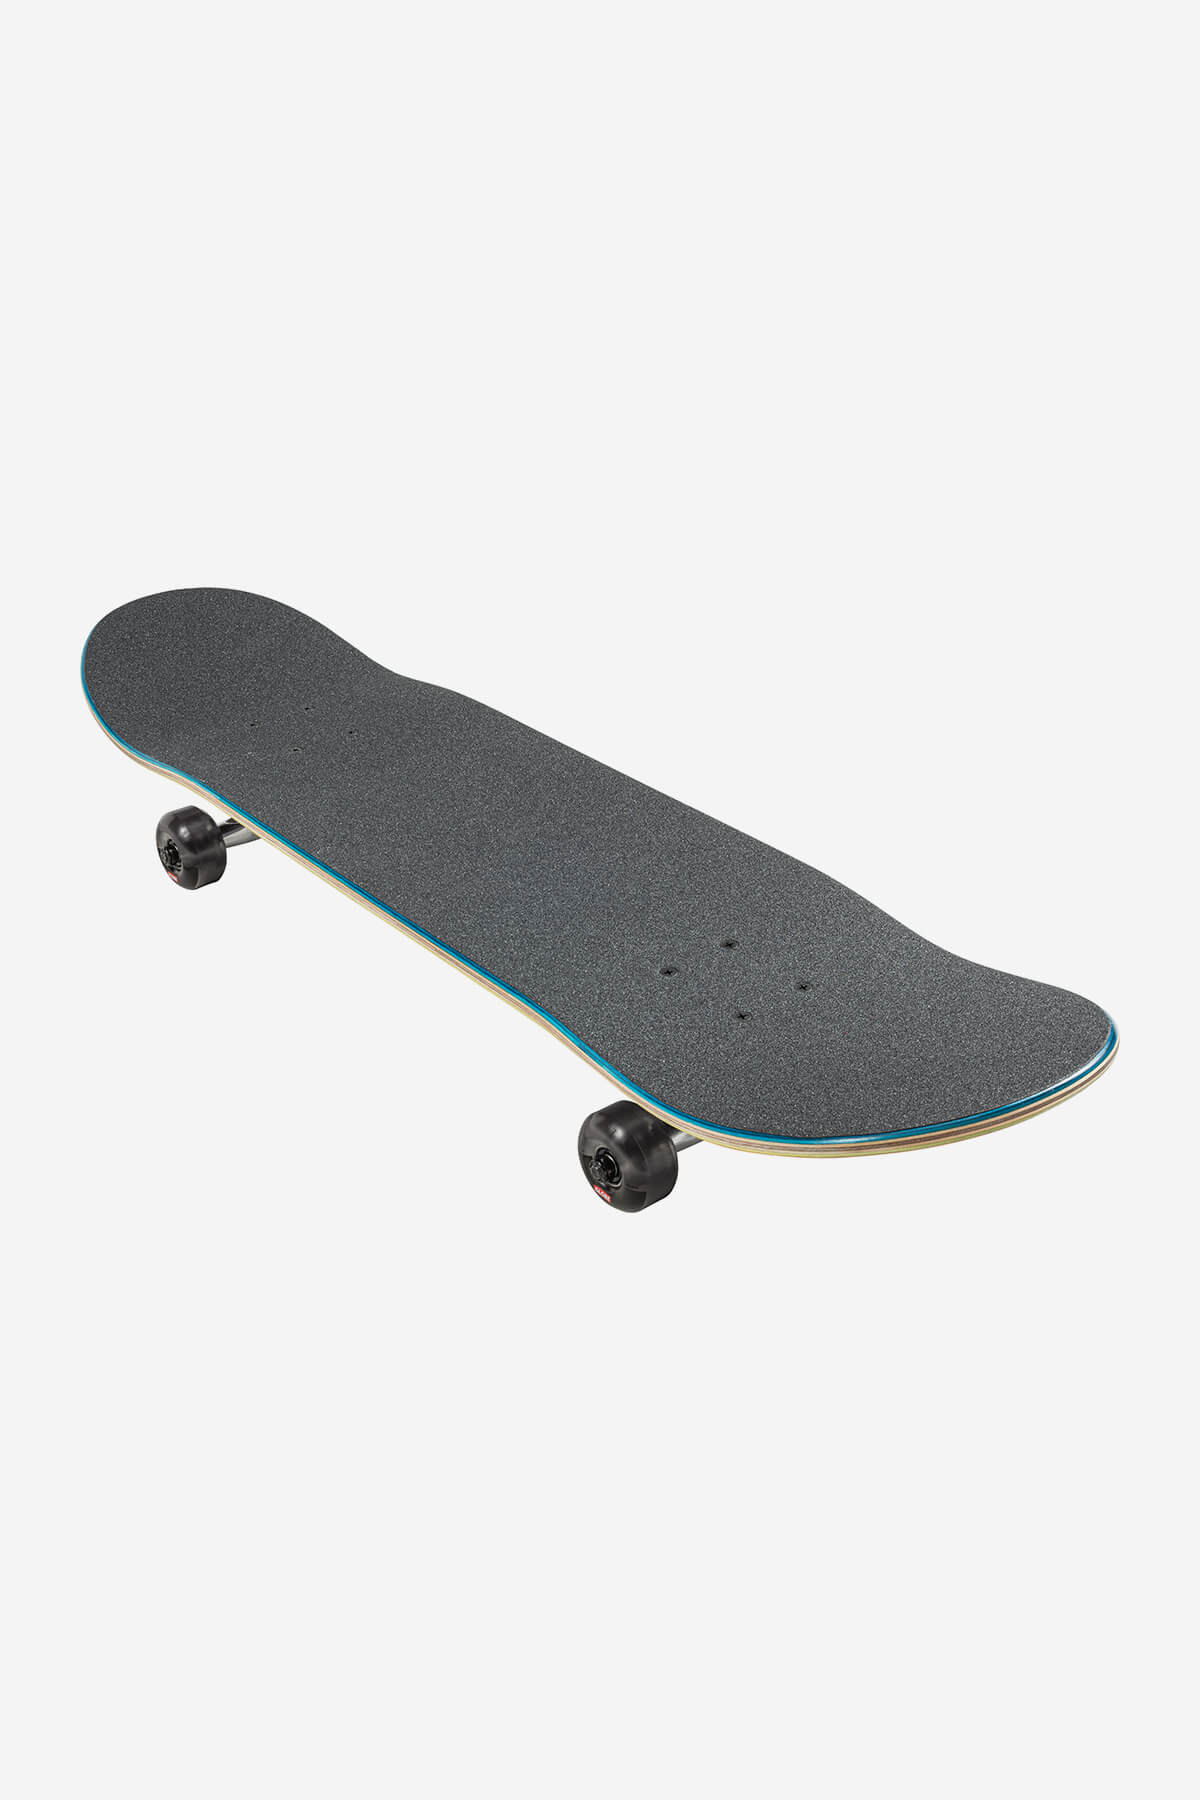 g1 ablaze black dye 8.0" compleet skateboard